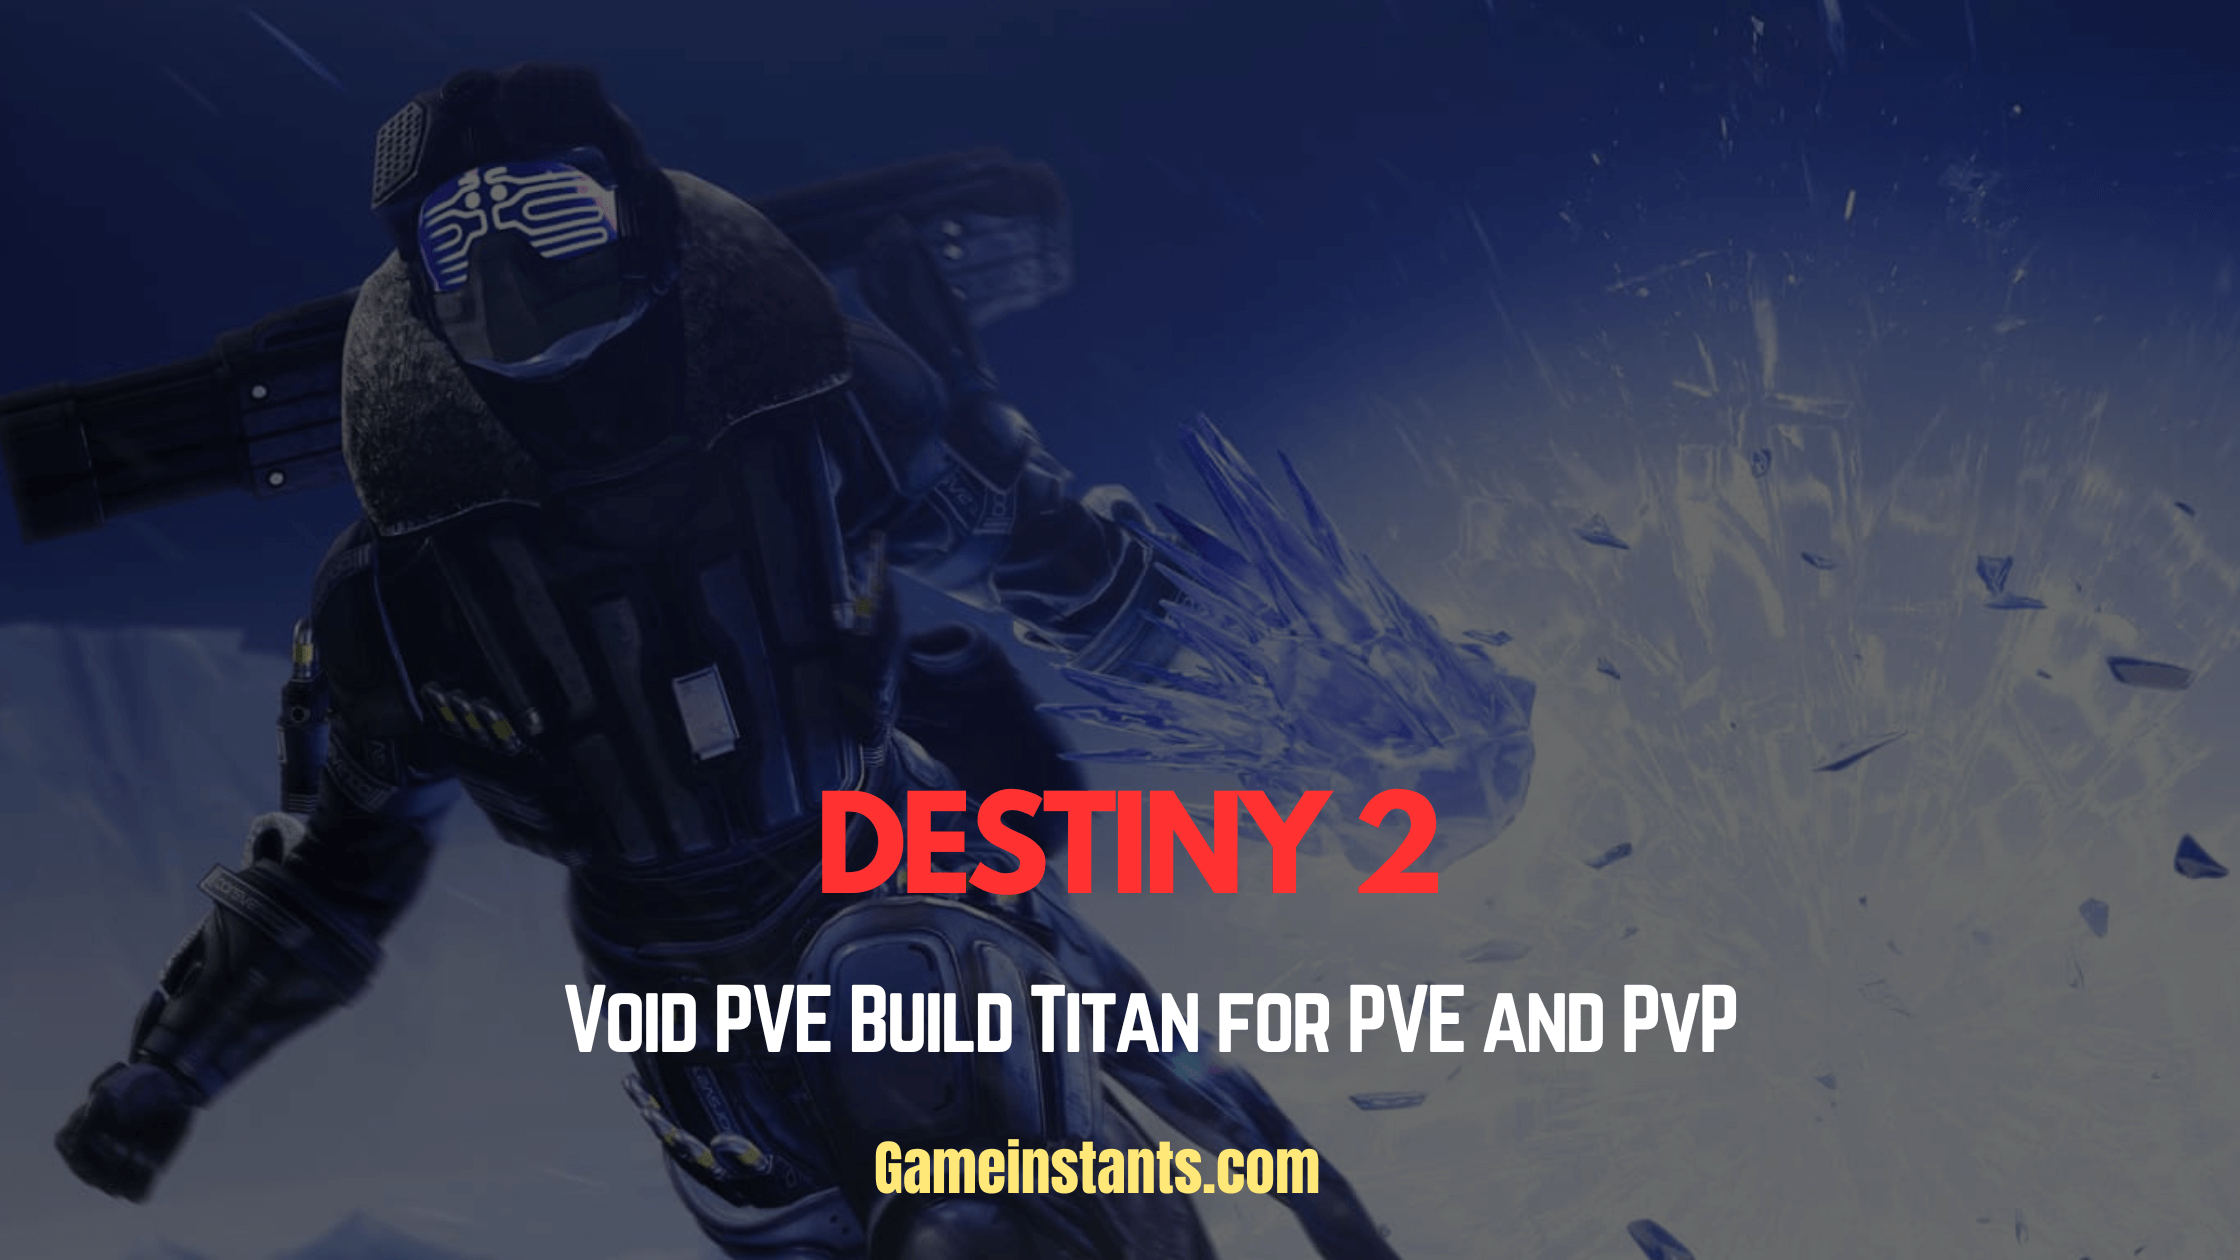 Destiny 2 Void PVE Build Titan For PVE and PvP